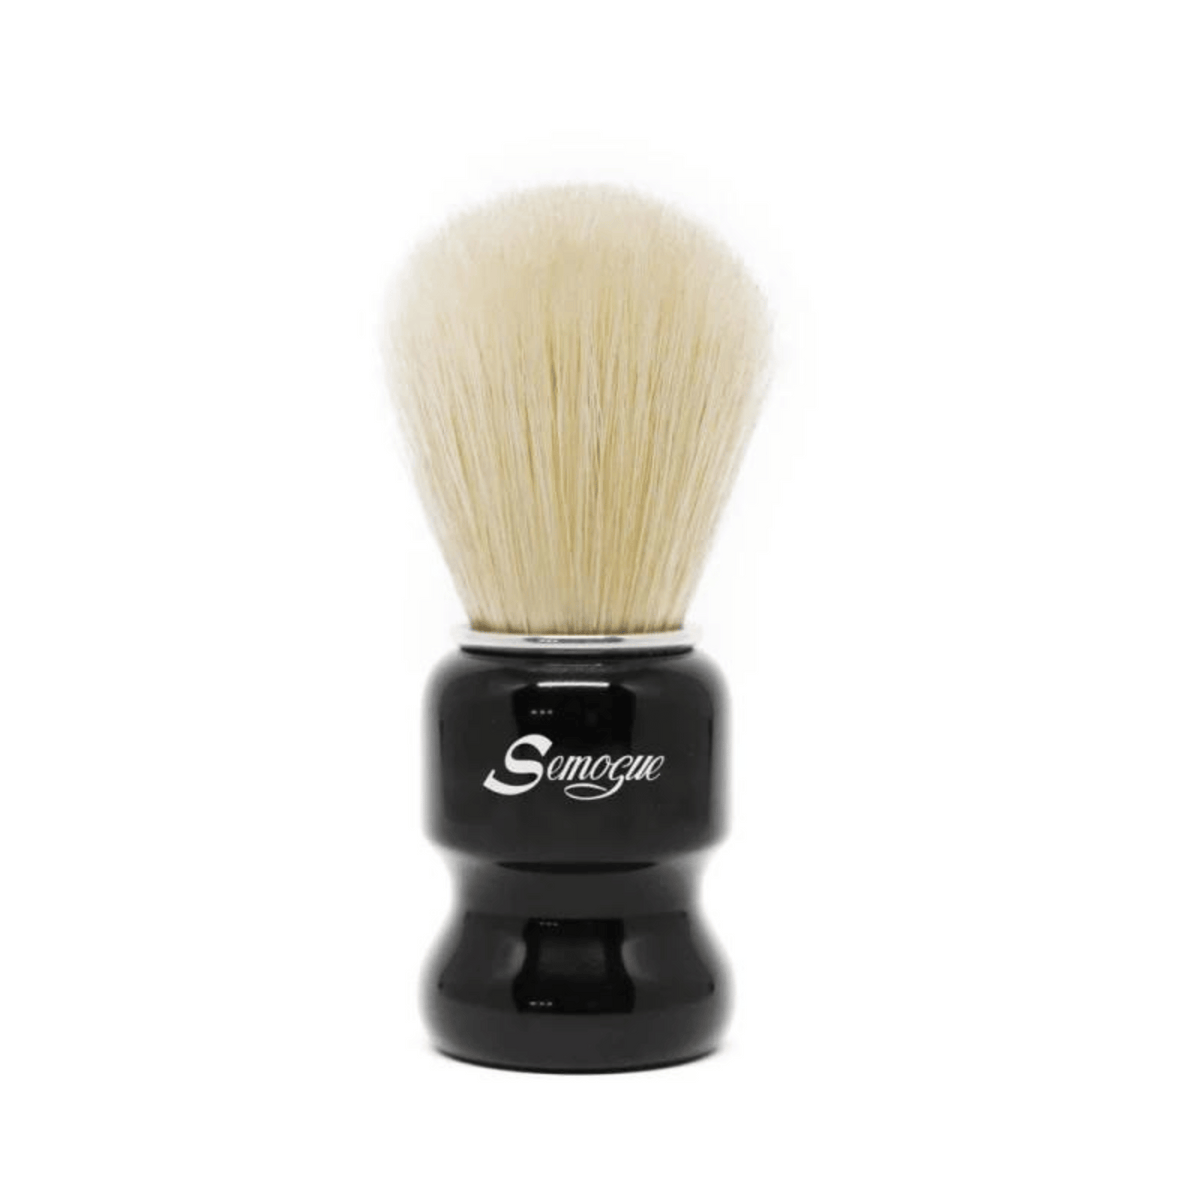 Primary Image of Torga-C5 Premium Boar Hair Shave Brush with Jet Black Handle